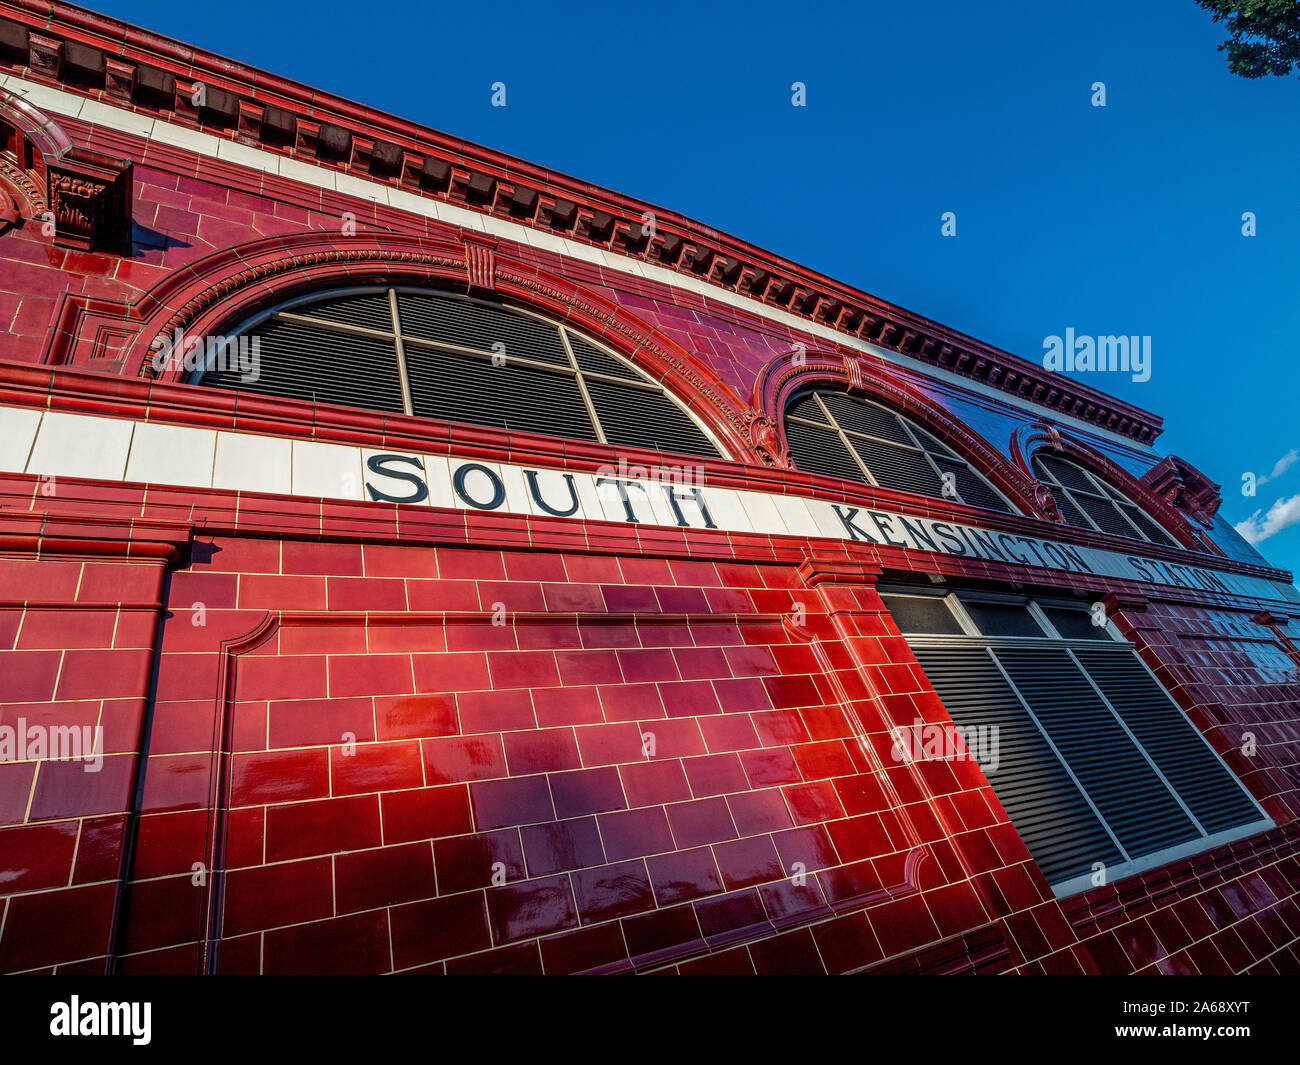 Red tiled exterior of South Kensington Tube Station, London, UK. Stock Photo